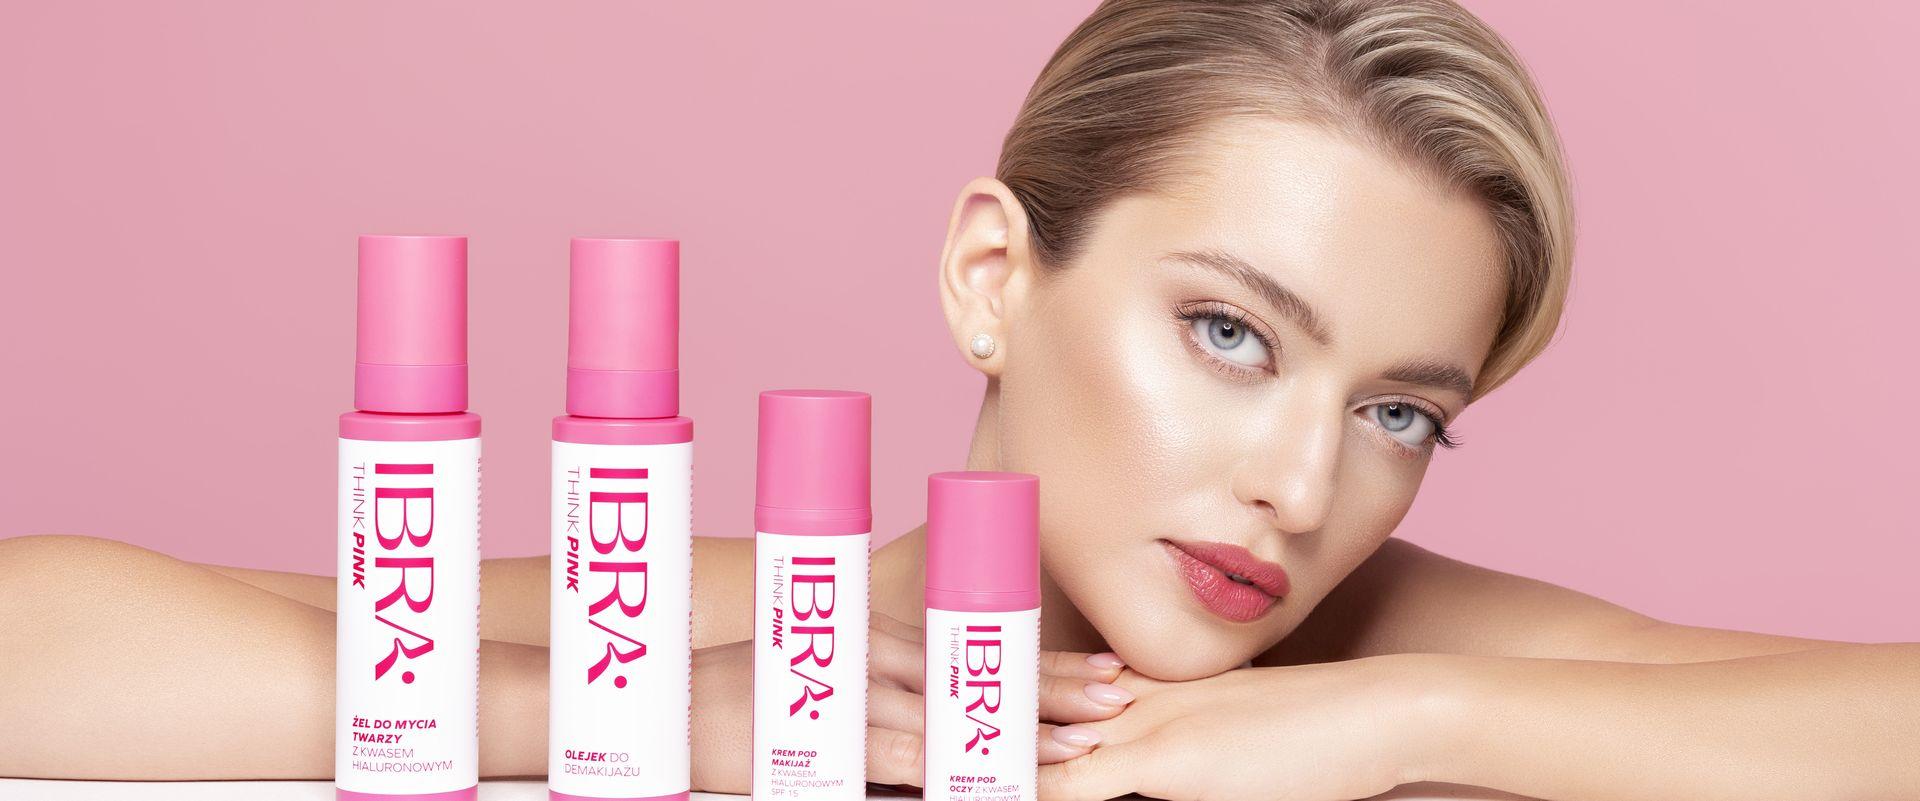 Think Pink - naturalna pielęgnacja marki Ibra